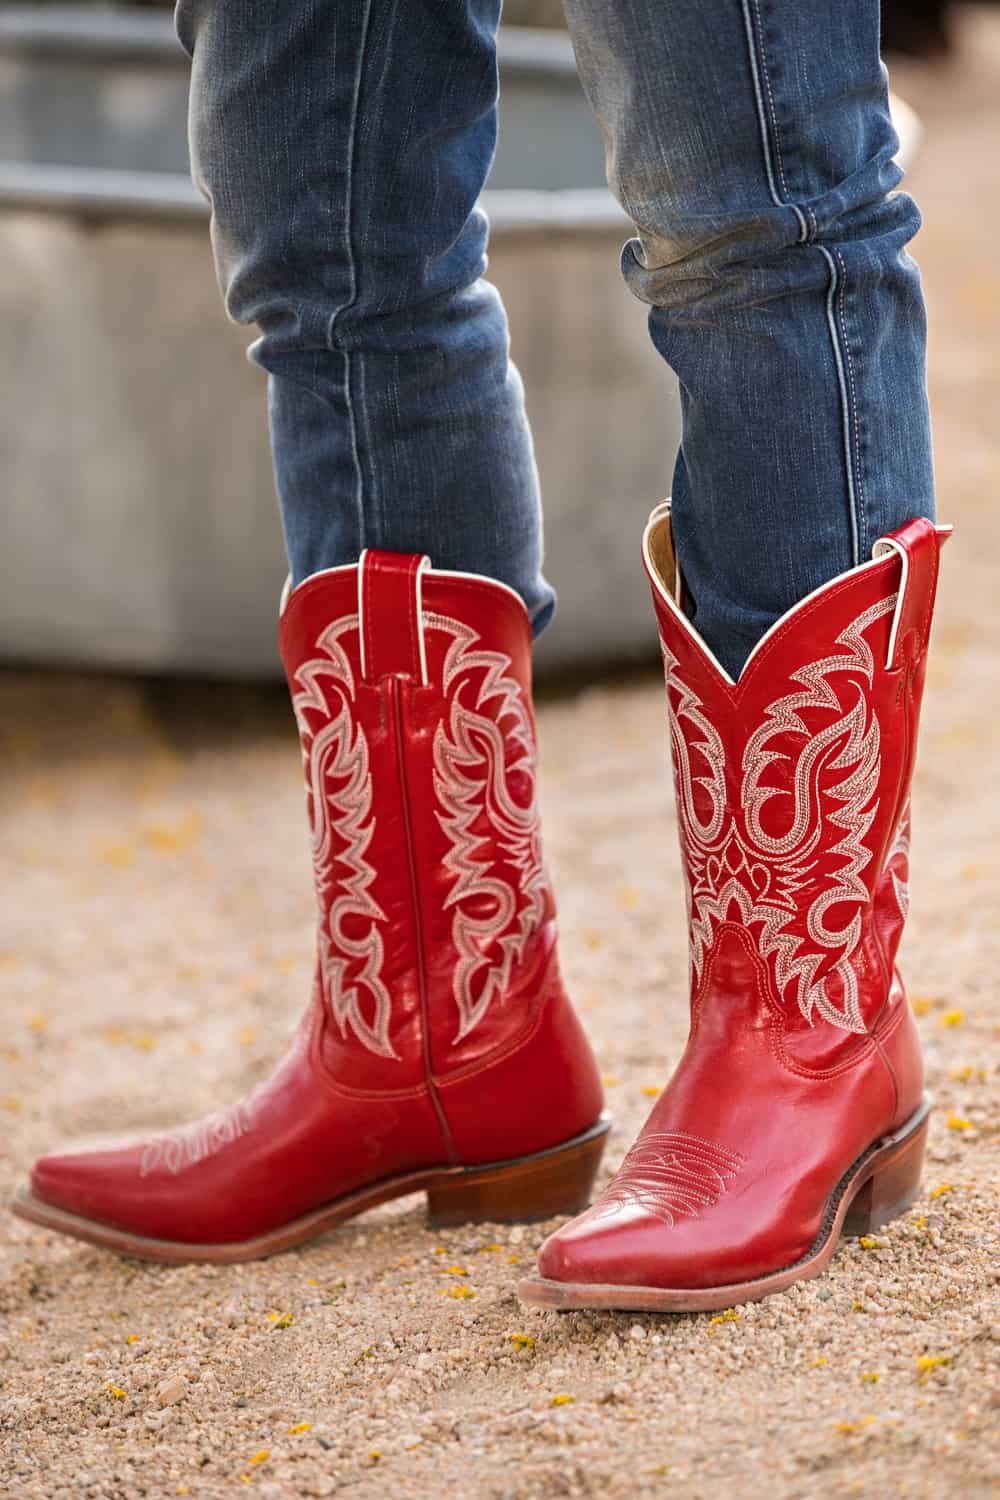 How Cowboy Boots Should Fit You